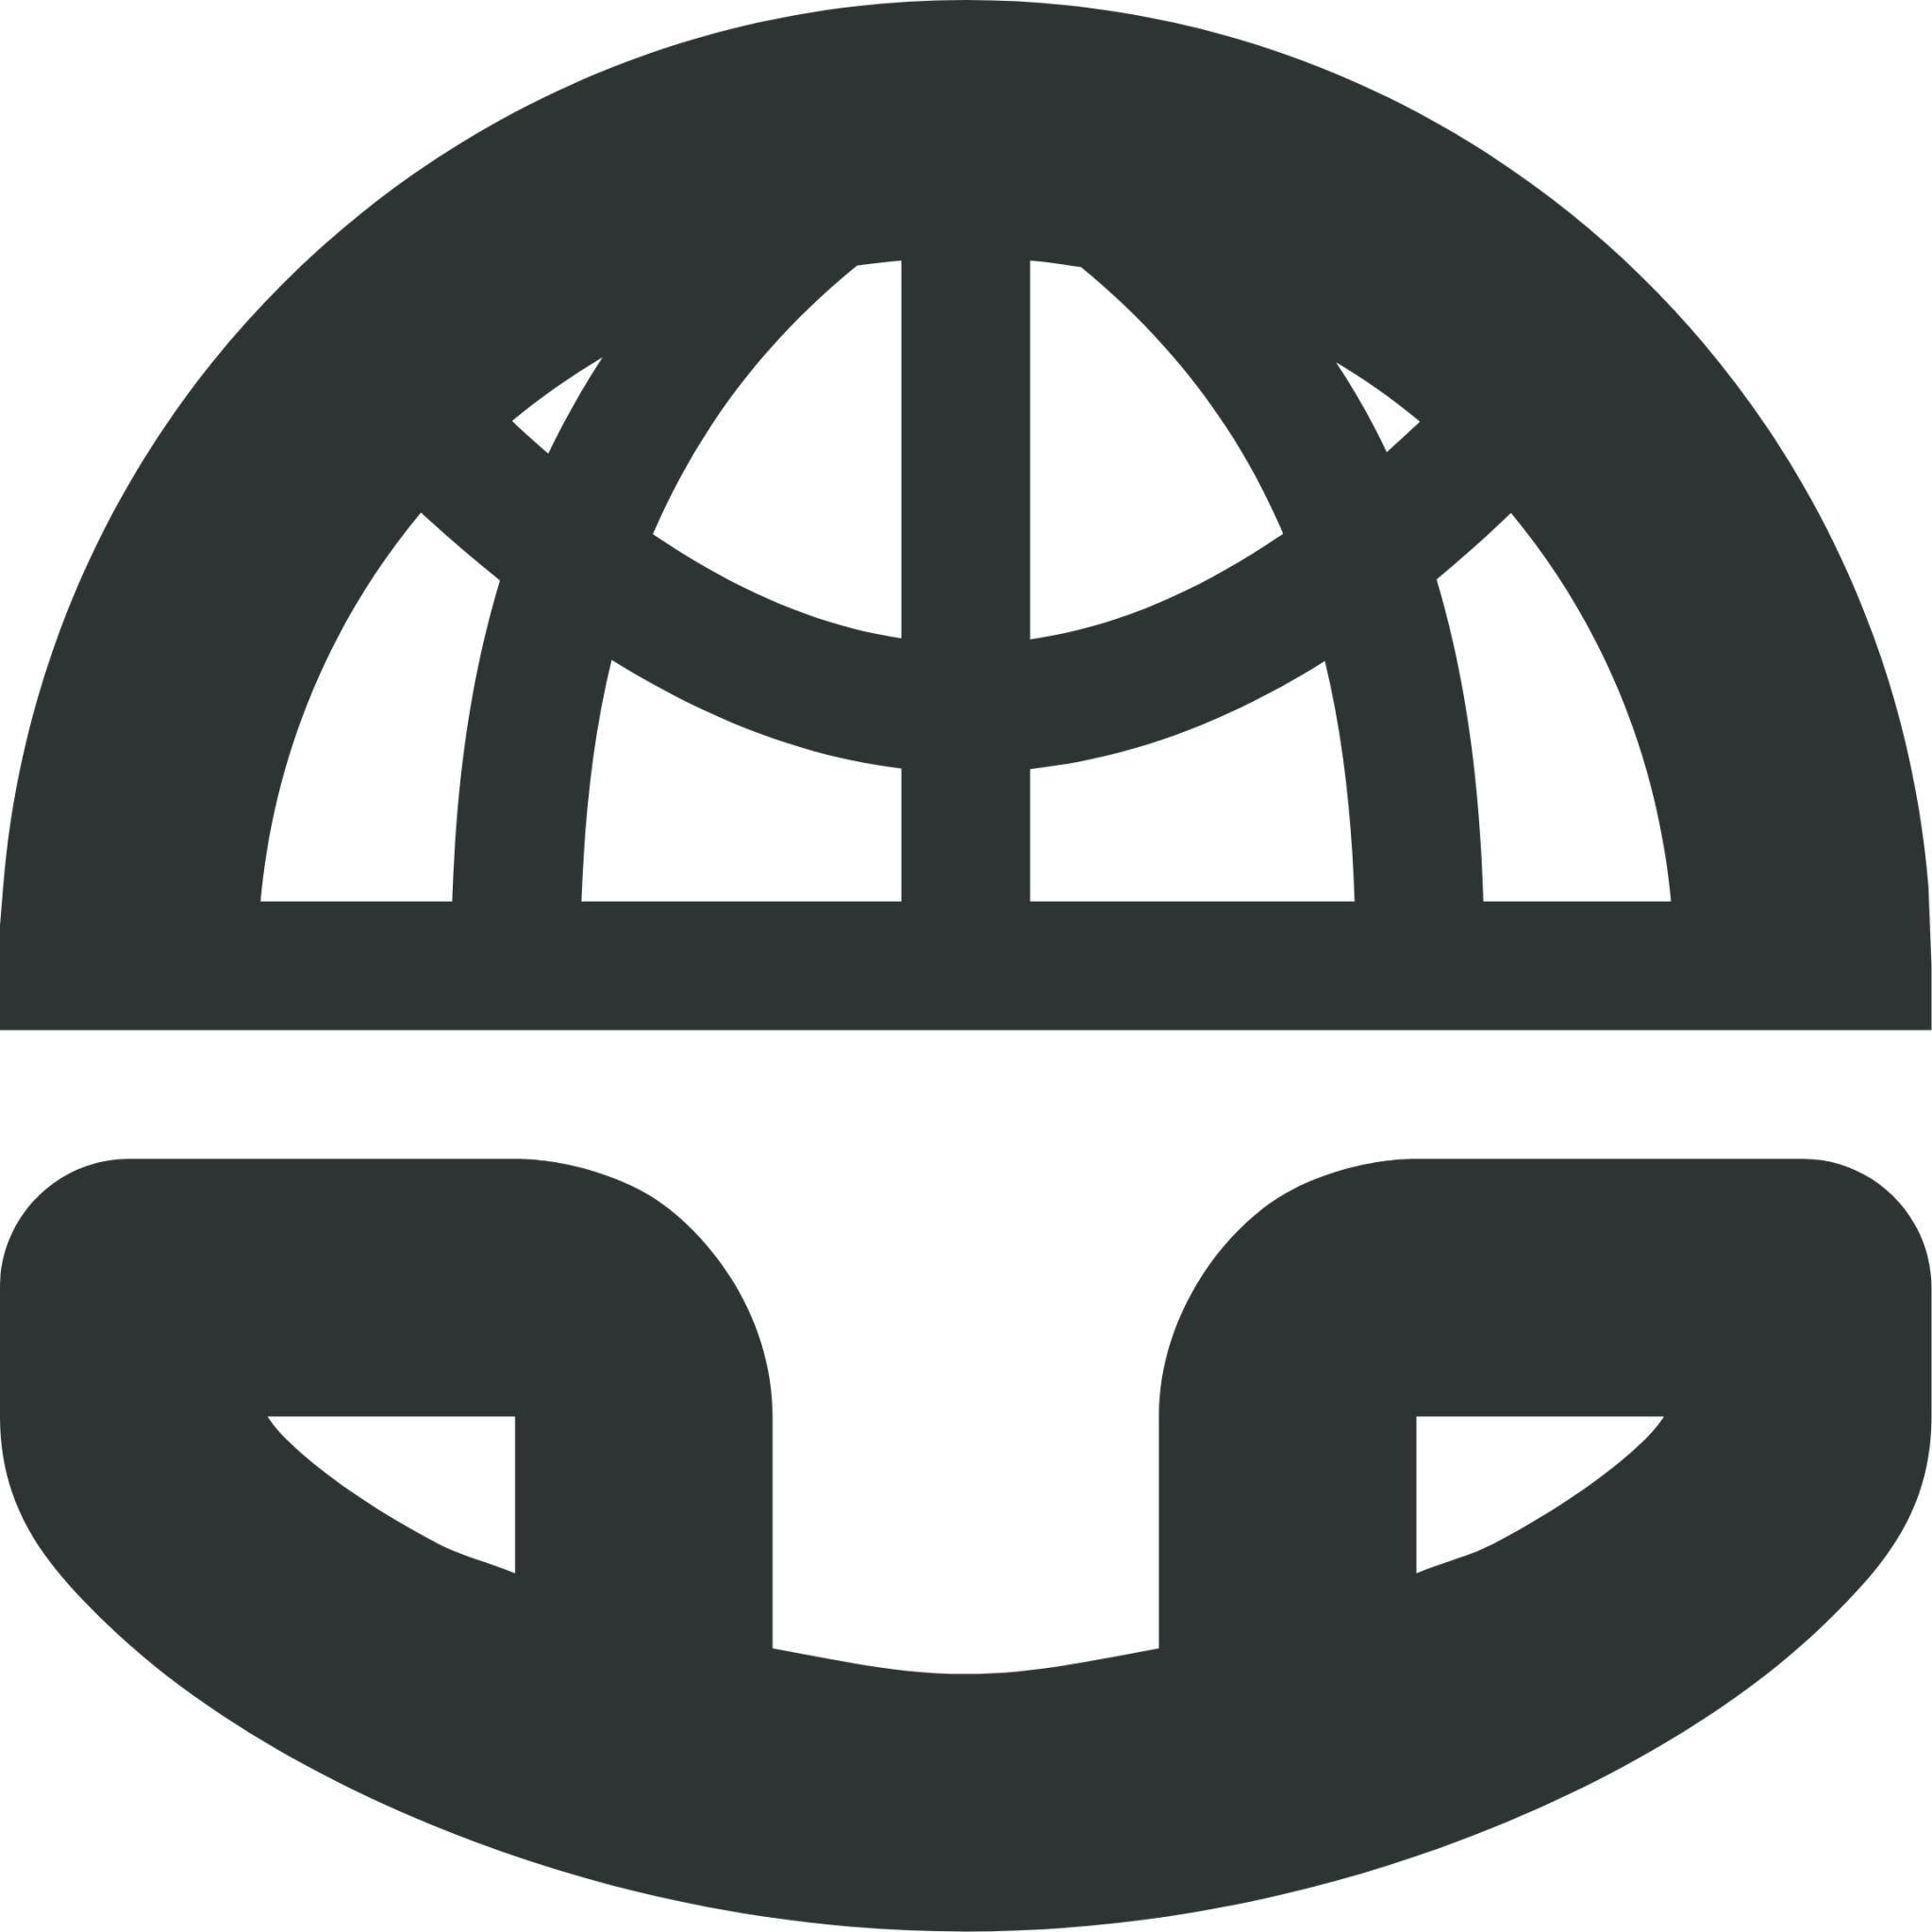 modem symbolic icon